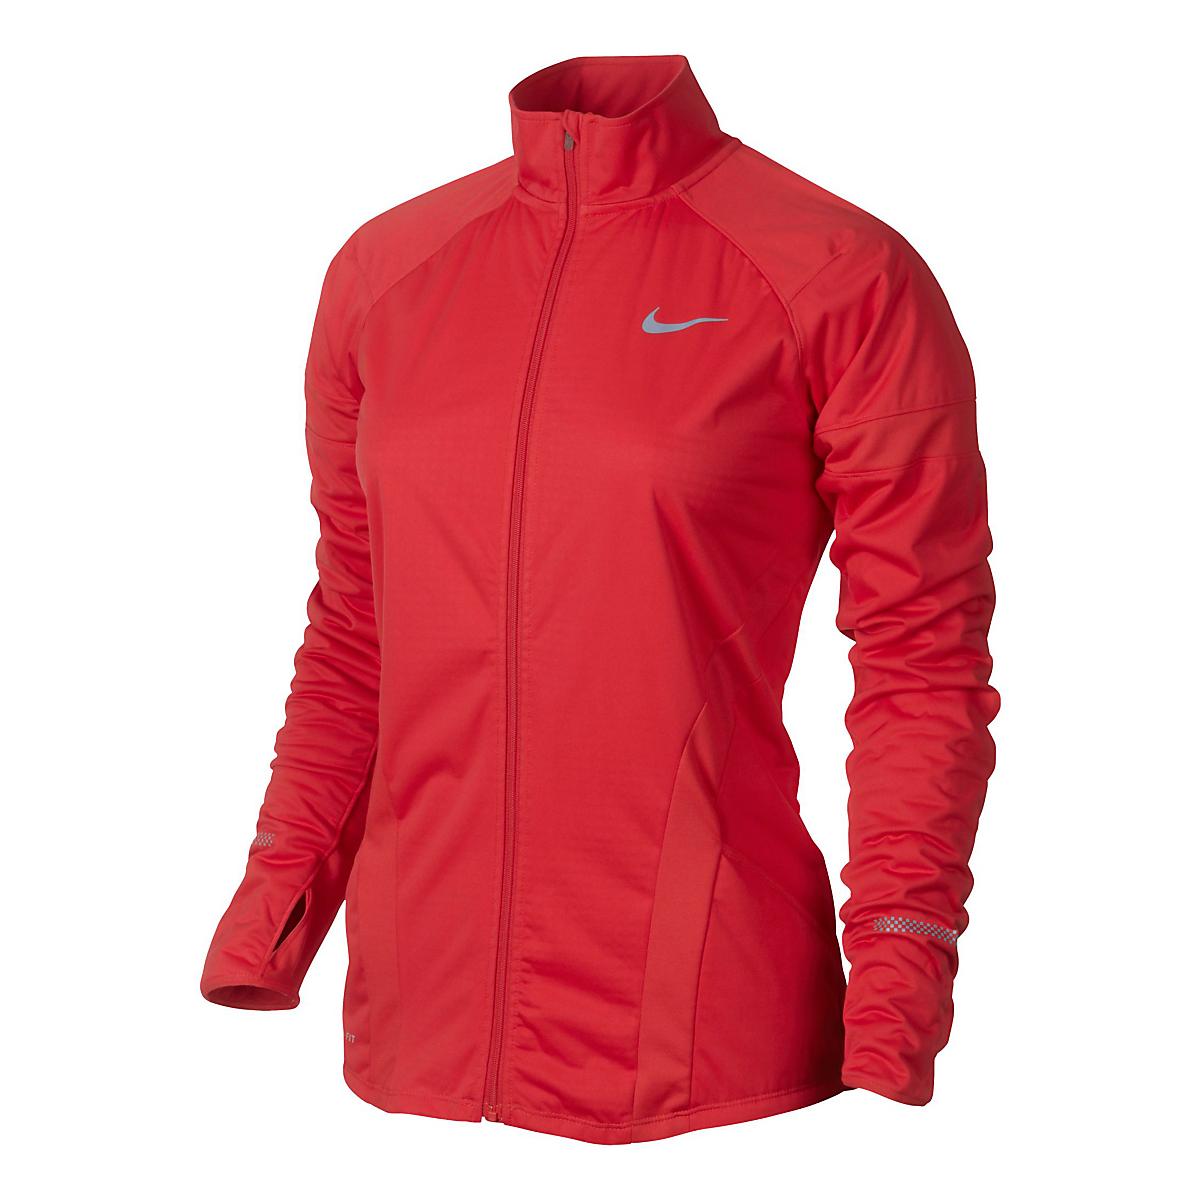 Womens Nike Aeroloft Hybrid Running Jackets at Road Runner Sports